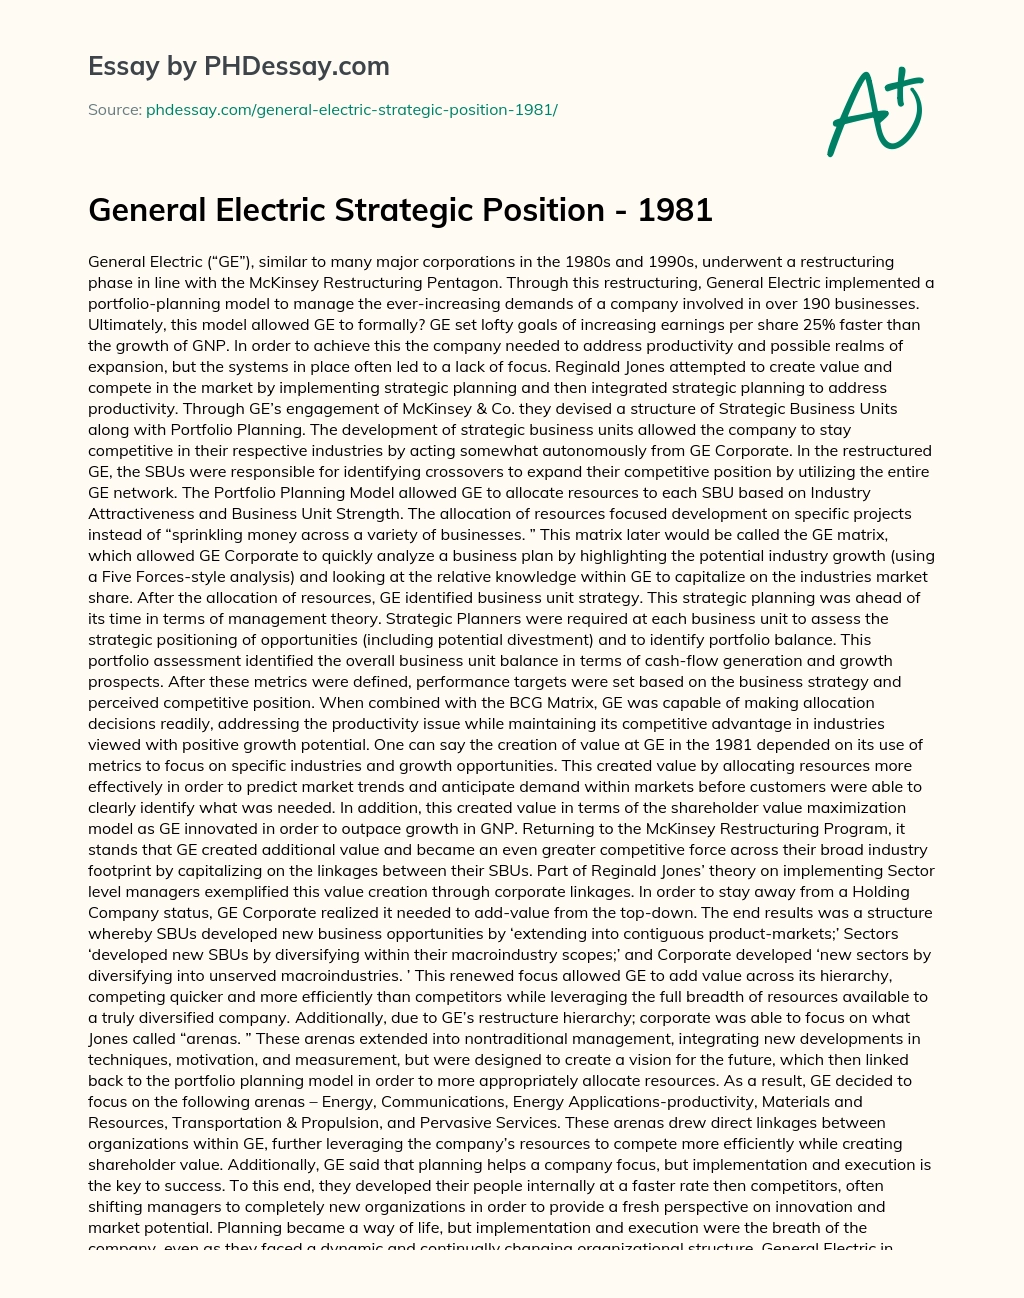 General Electric Strategic Position – 1981 essay